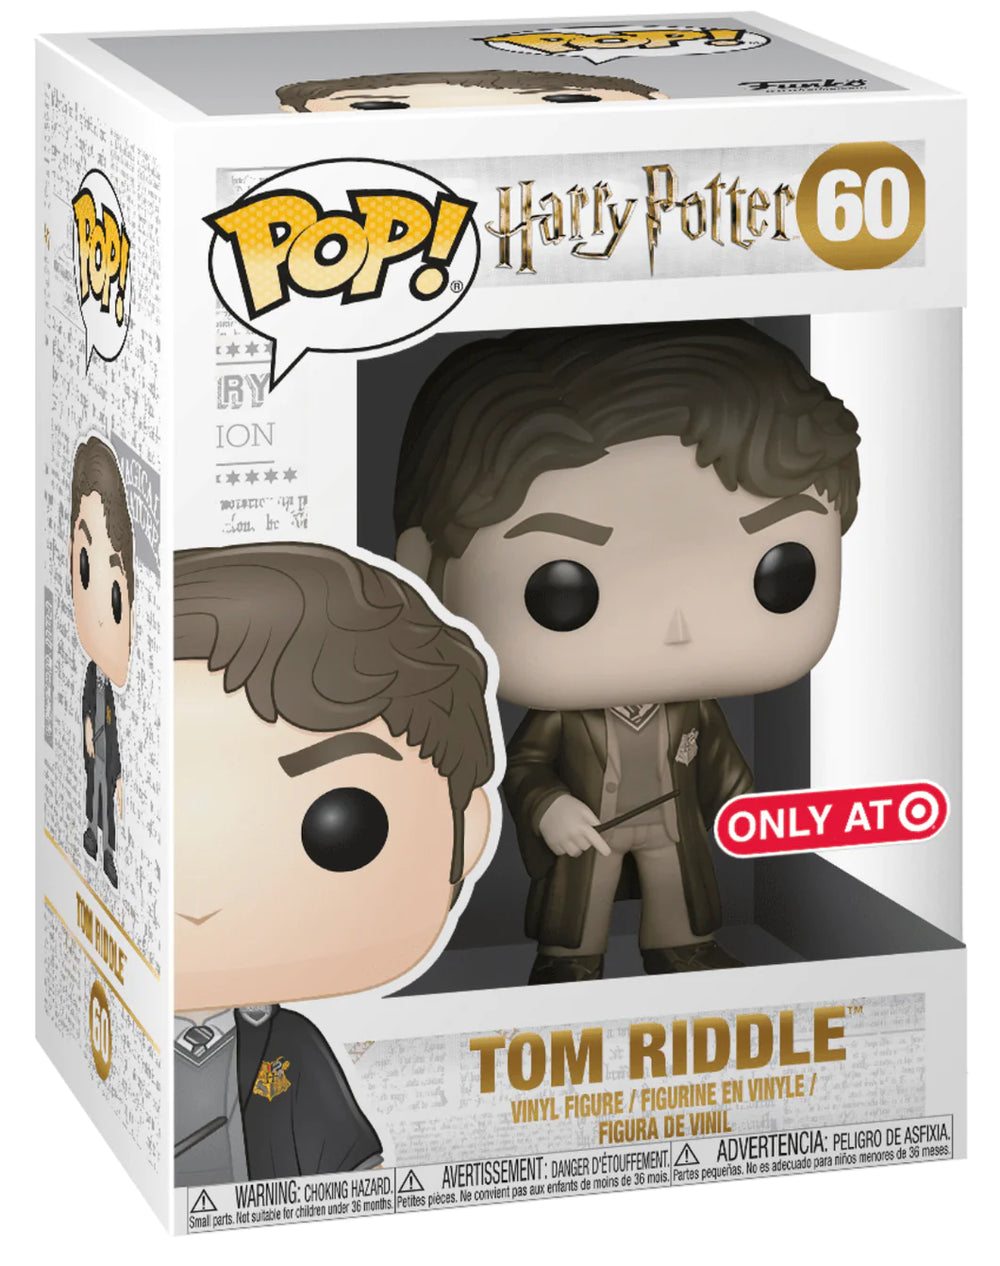 Funko Pop! Tom Riddle #60 “Harry Potter”